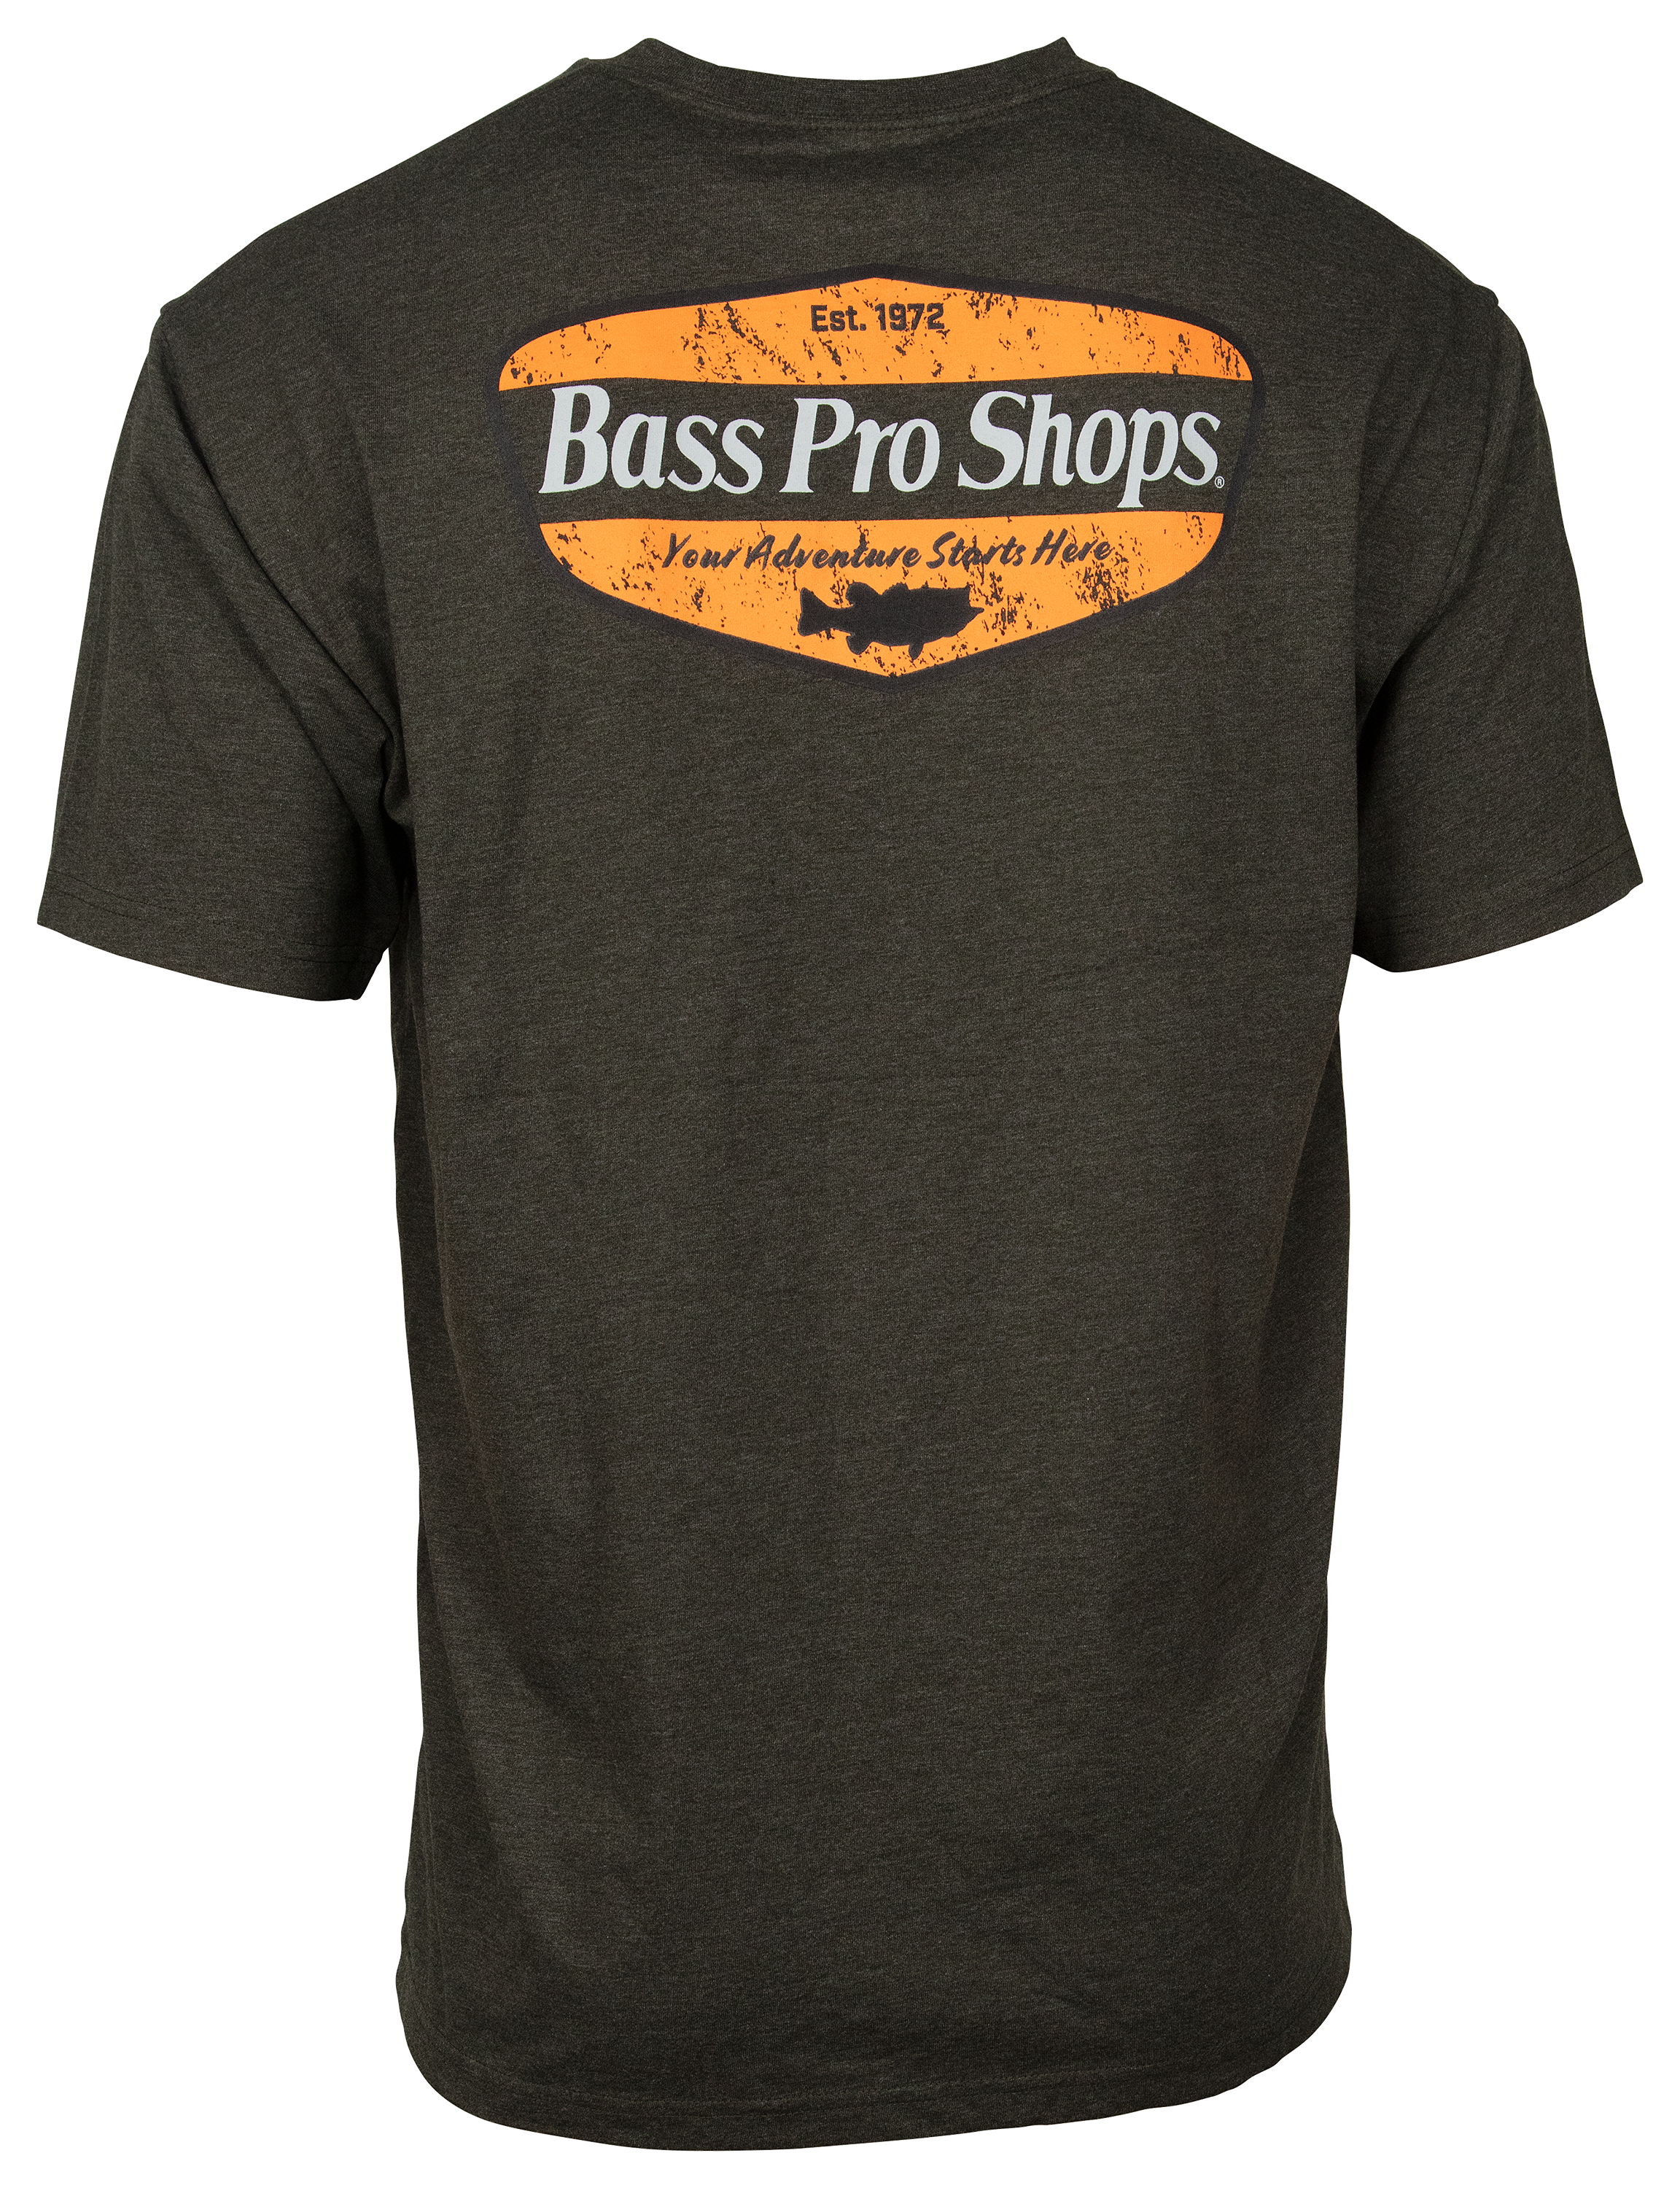 Bass Pro Shops - Our famous $5 FLAG T-SHIRTS have